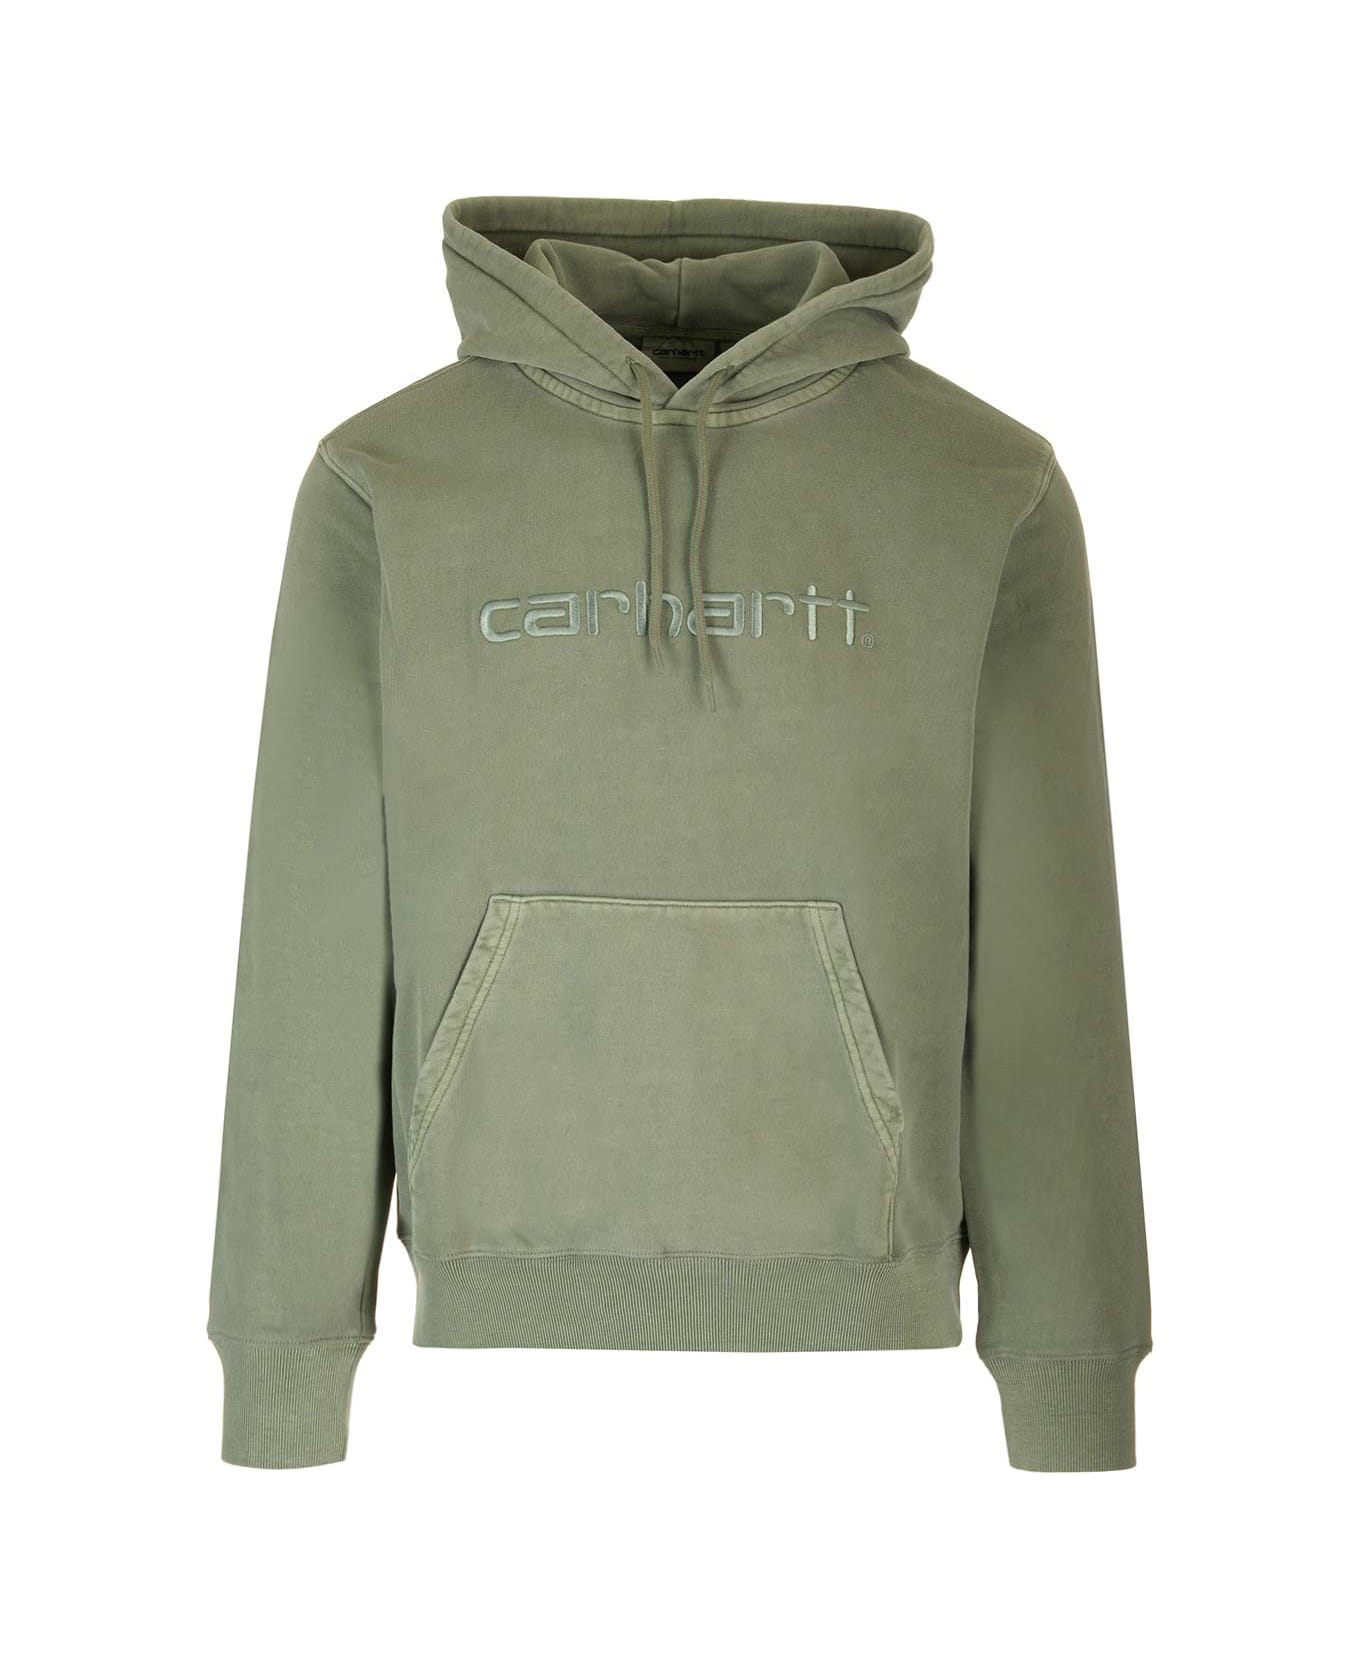 Carhartt Cotton Hooded Sweatshirt - Military